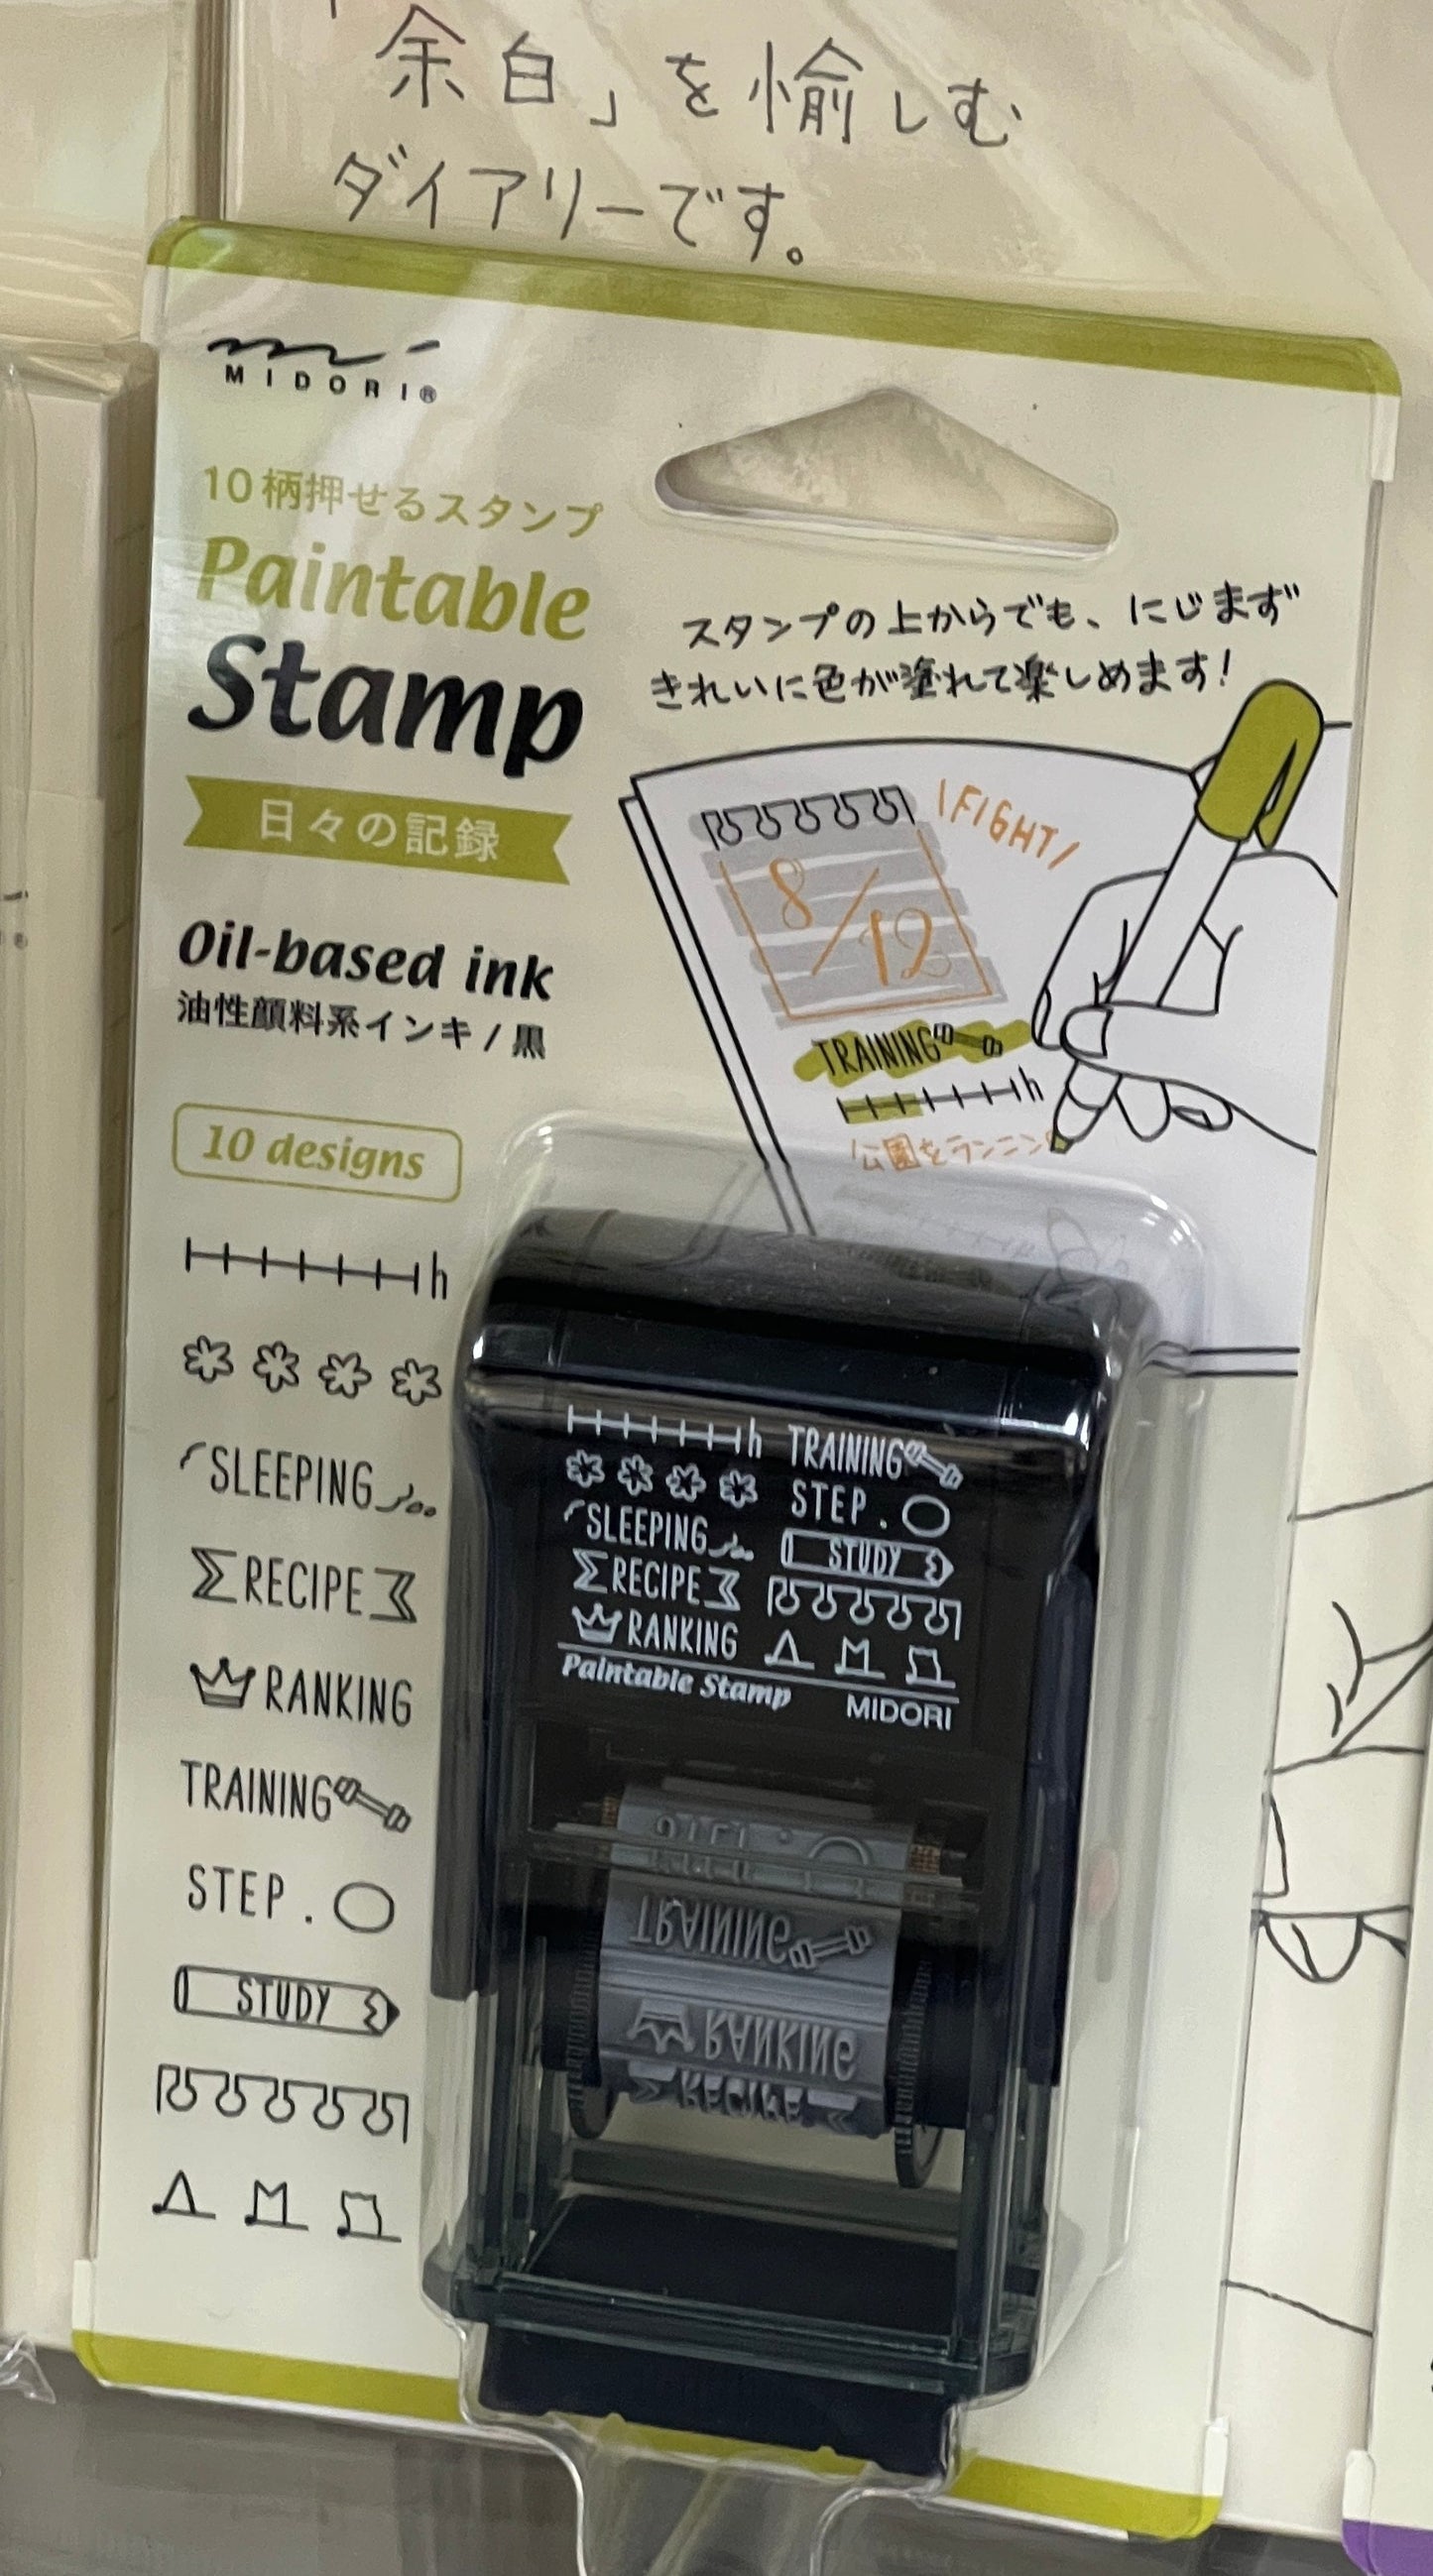 MIDORI Paintable Small Stamp Rotating Date by Midori